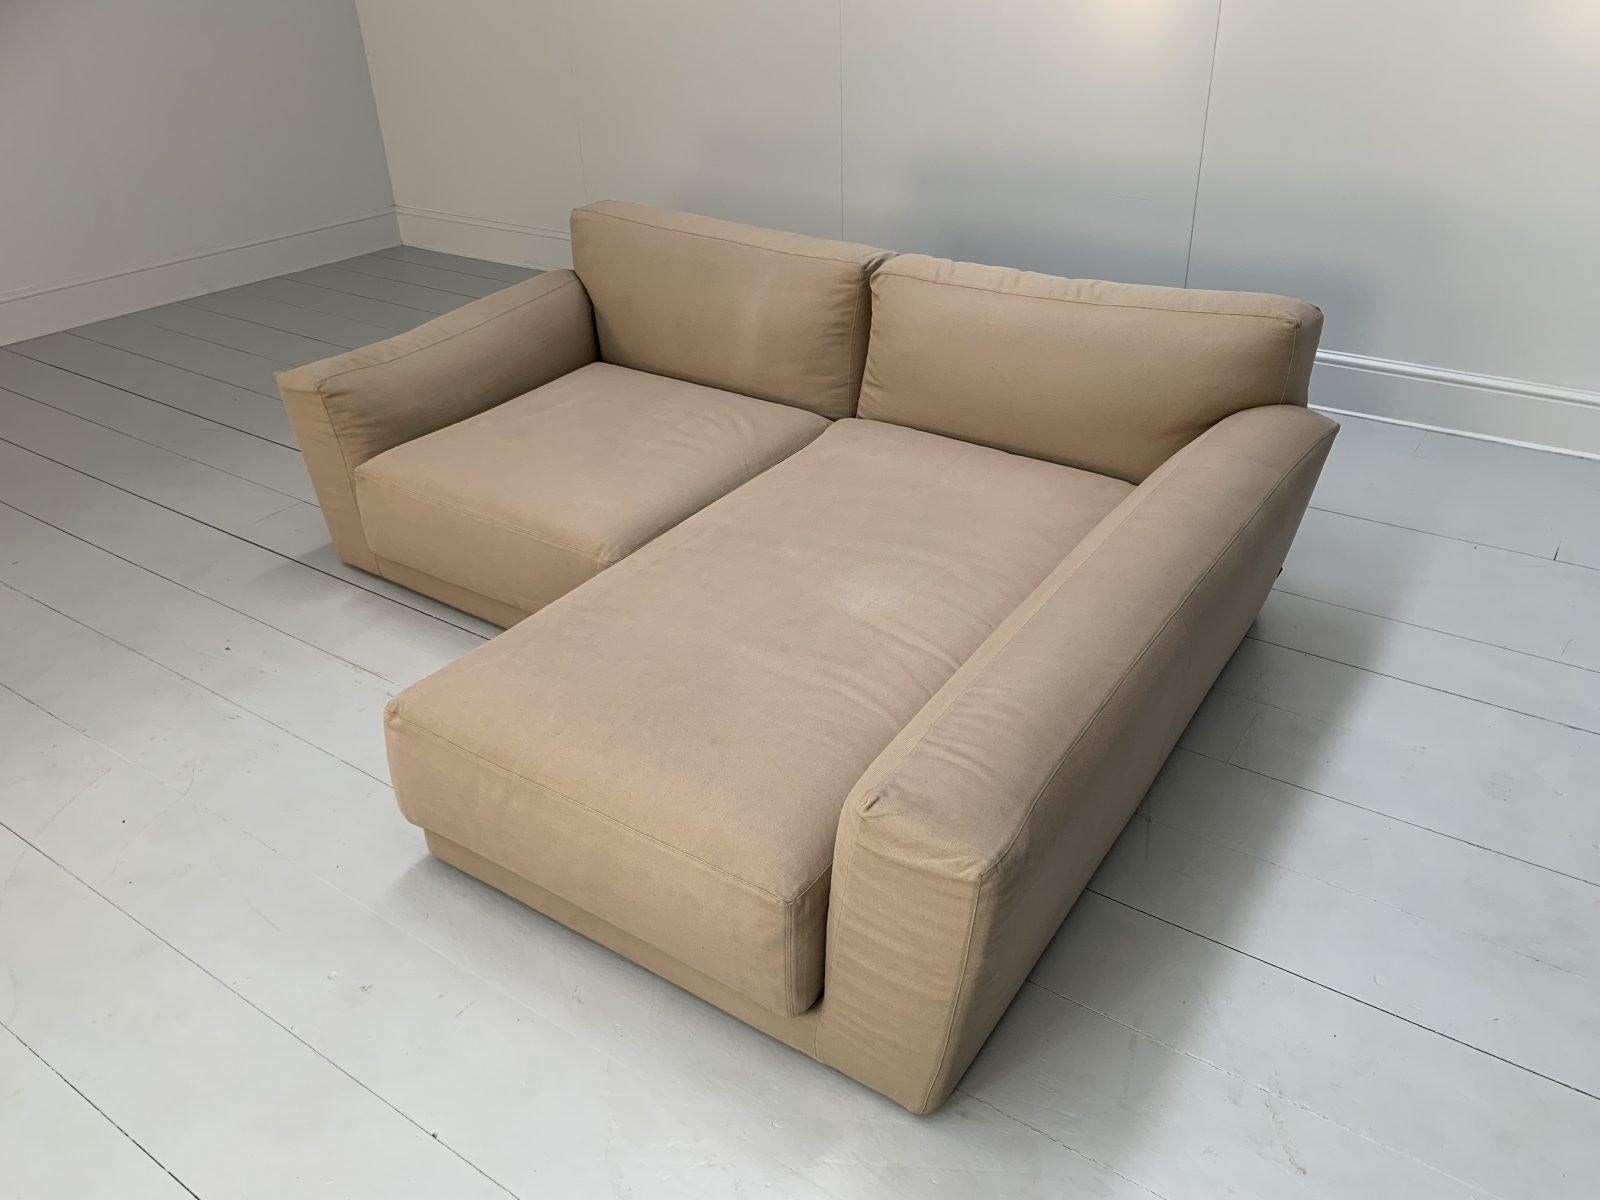 B&B Italia “Luis” 3-Seat Compact L-Shape Sofa – In “Ellade” Linen For Sale 4